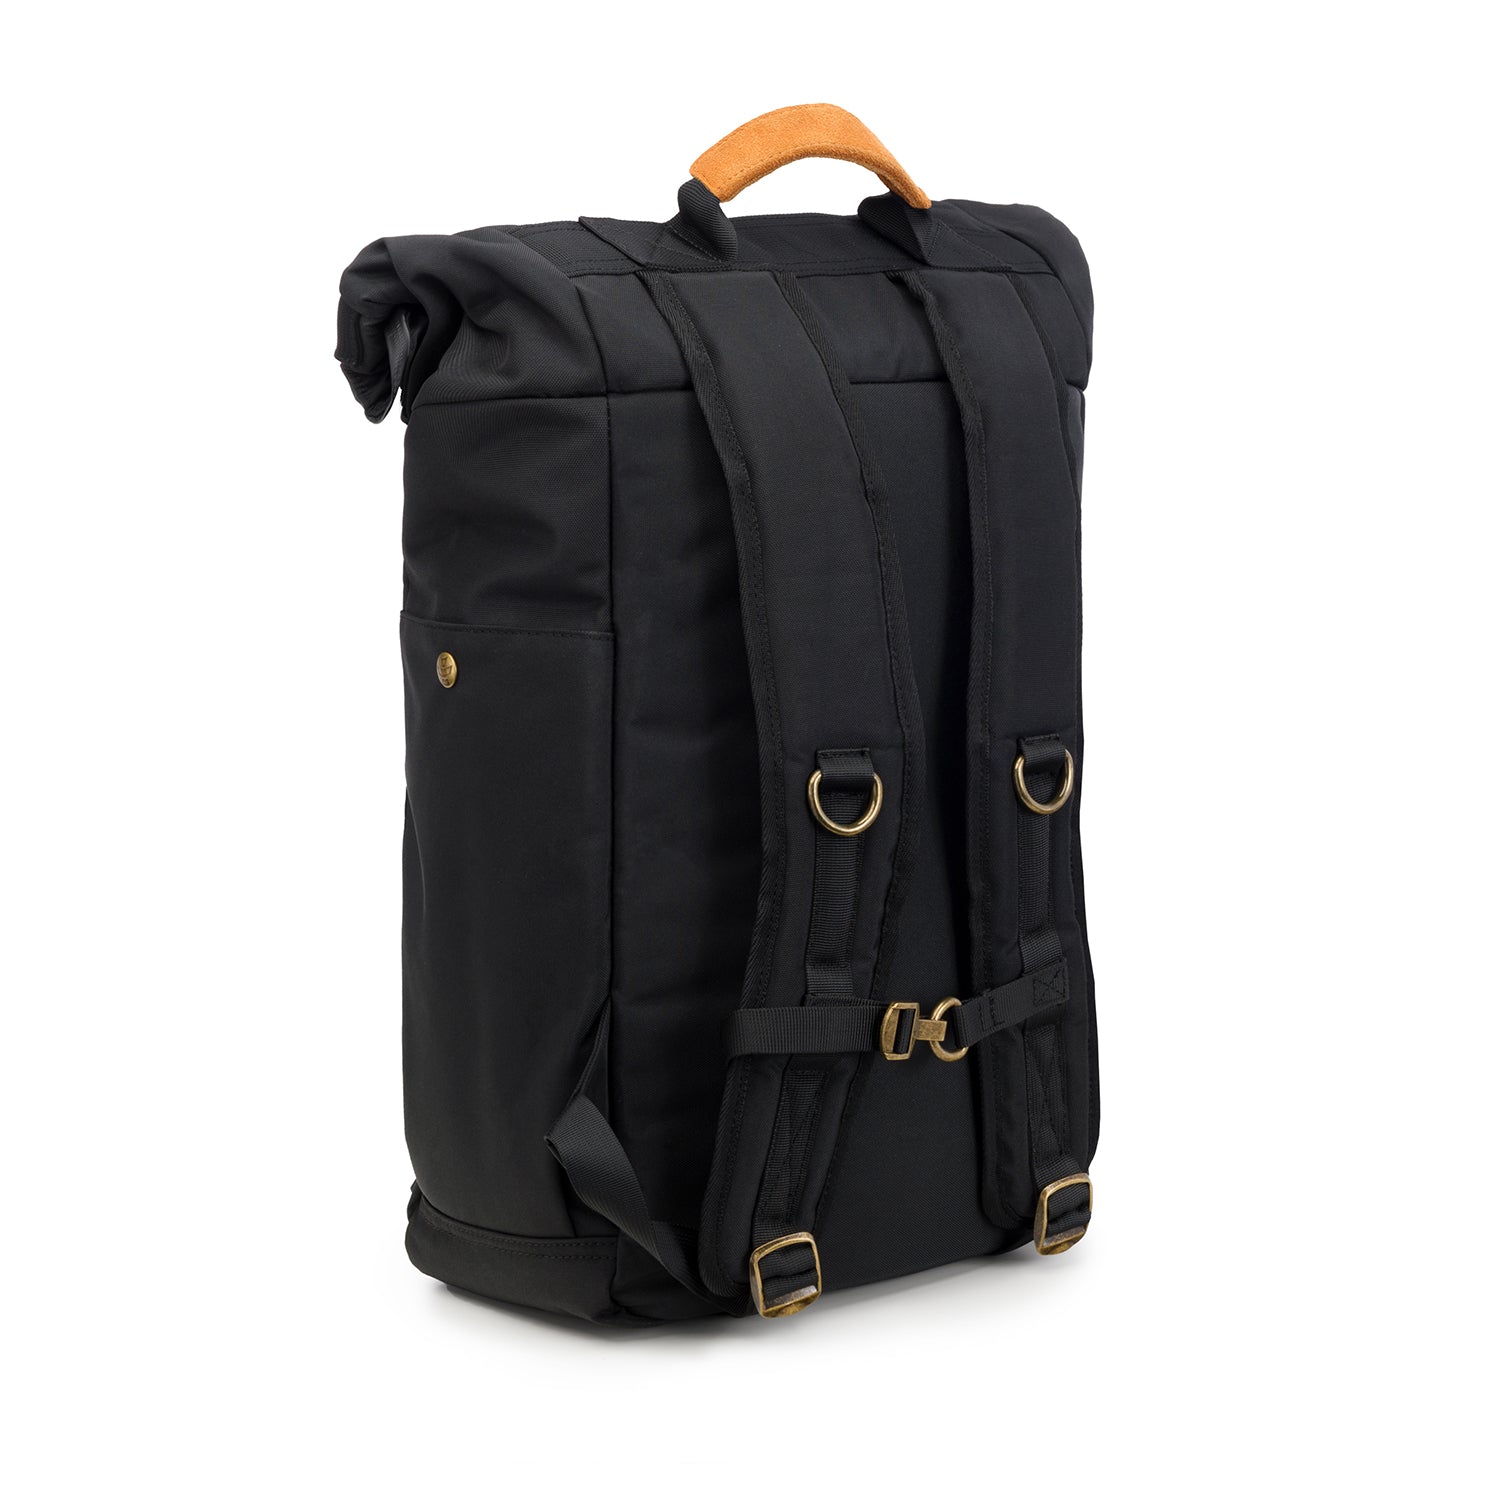 Black Nylon Smell Proof Water Resistant Rolltop Backpack Bag